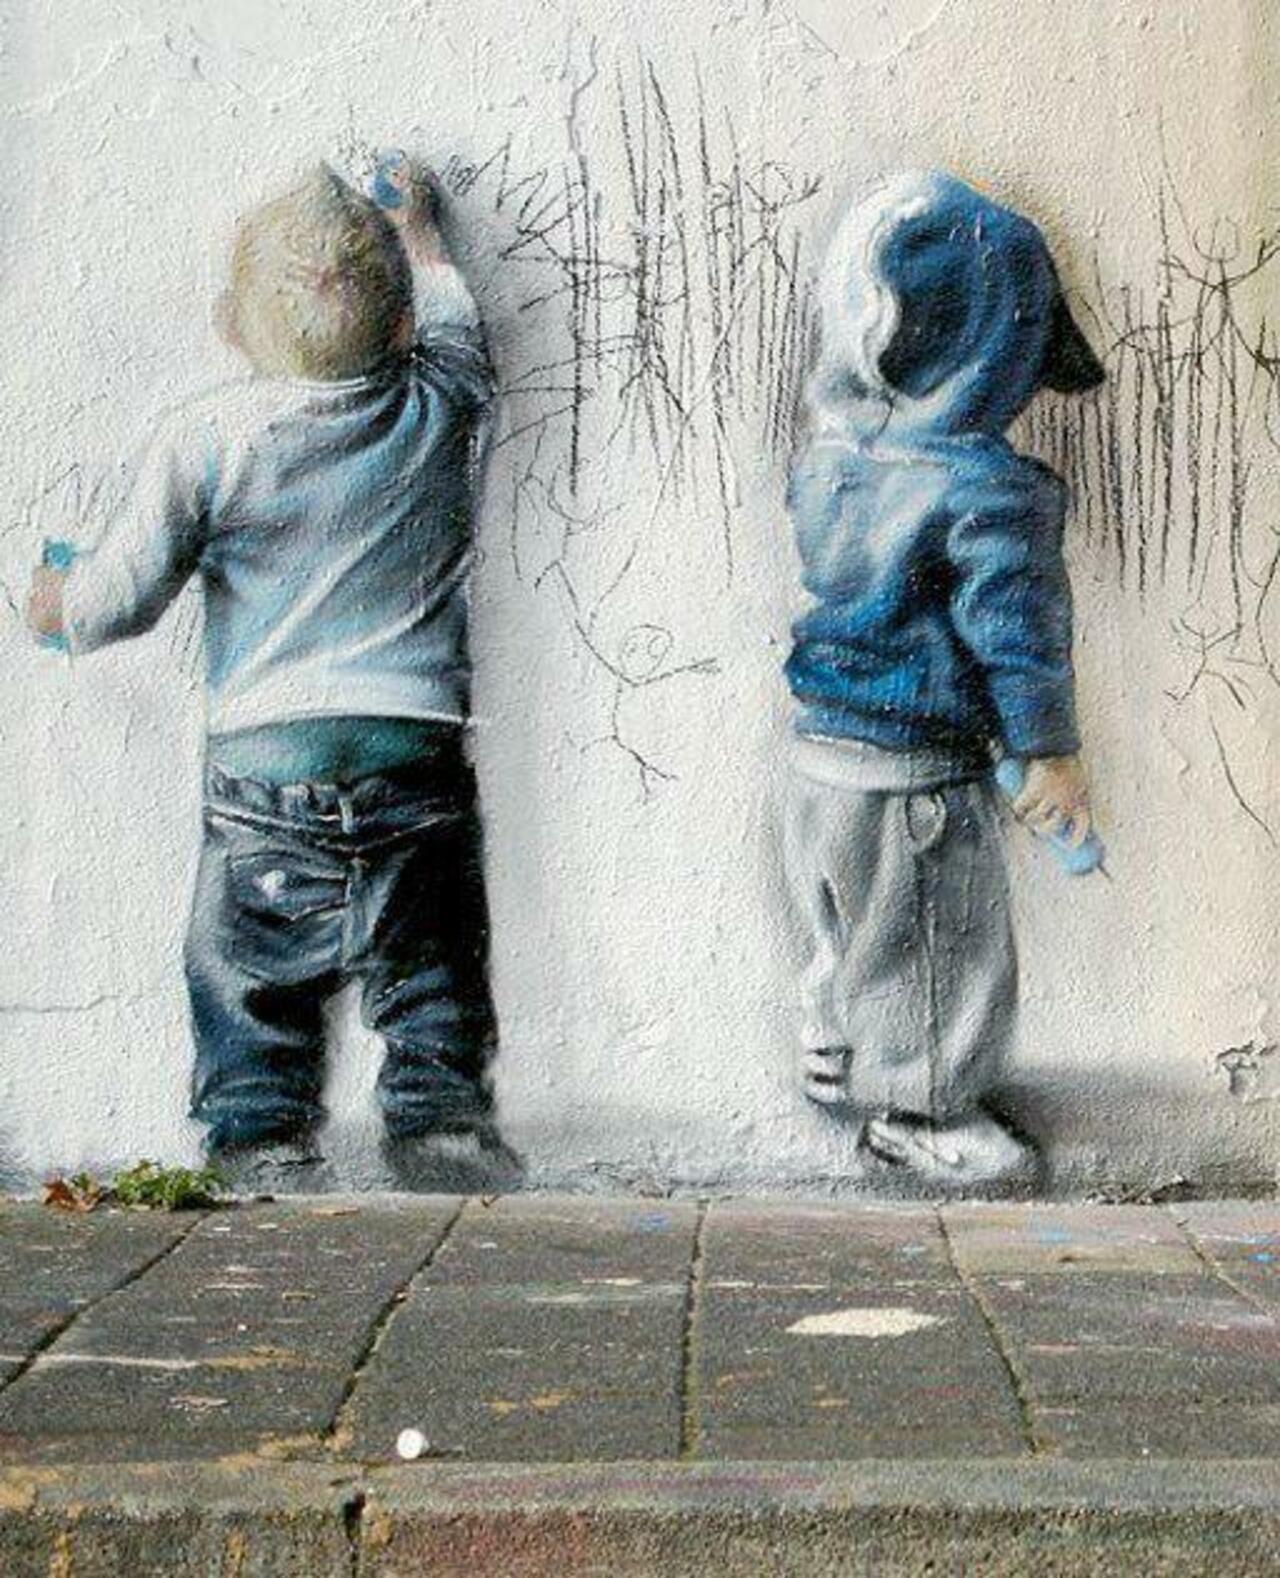 RT @Dame_Rouge: .@gianni_nigia - Enfants graffeurs #StreetArt #UrbanArt #Graffiti  http://t.co/1uYFF1FxwU”